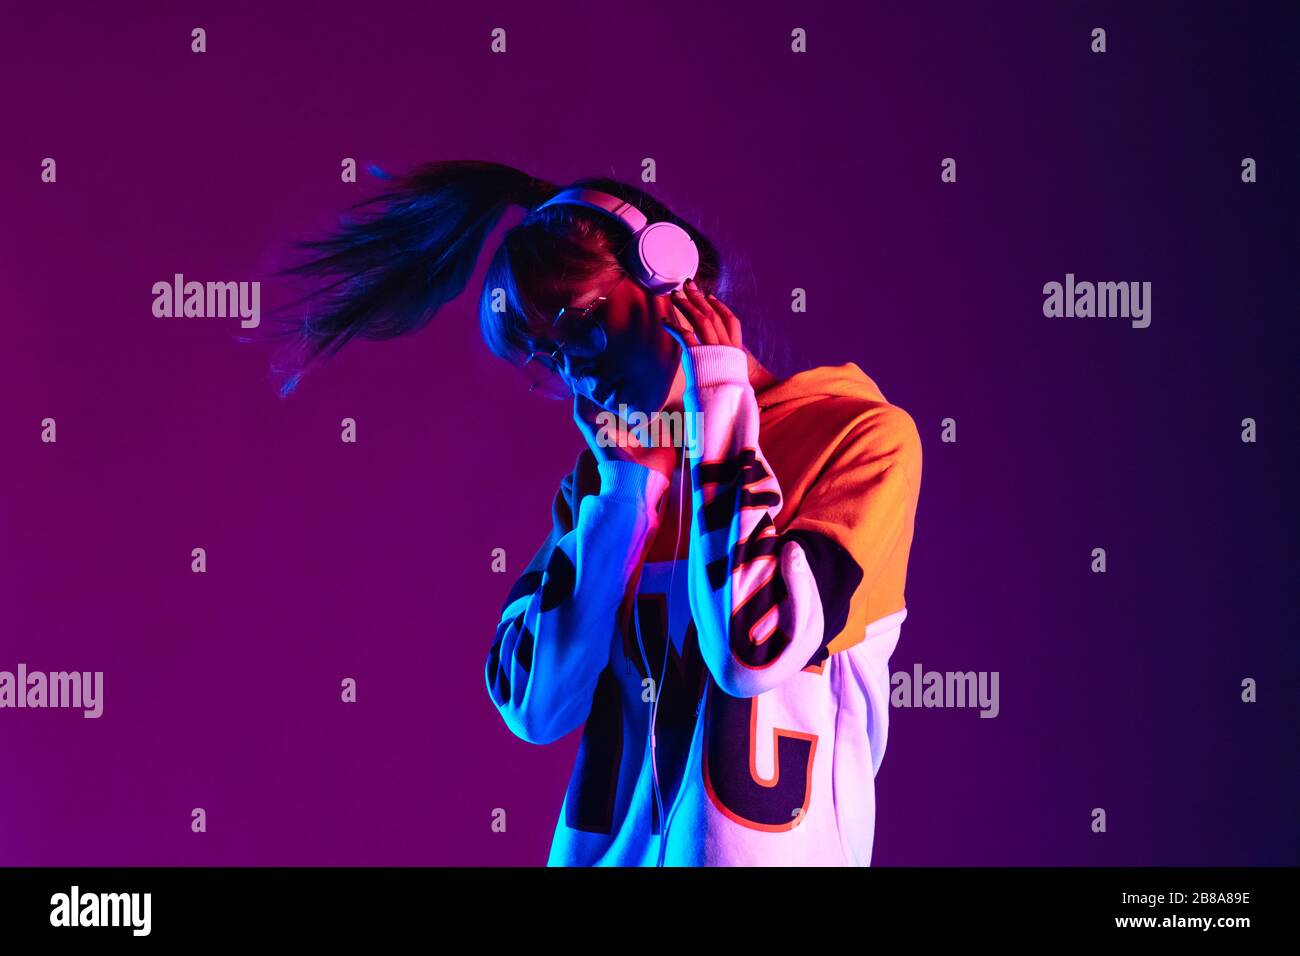 Fashion teenager wearing headphones listening music dancing in purple light. Stock Photo